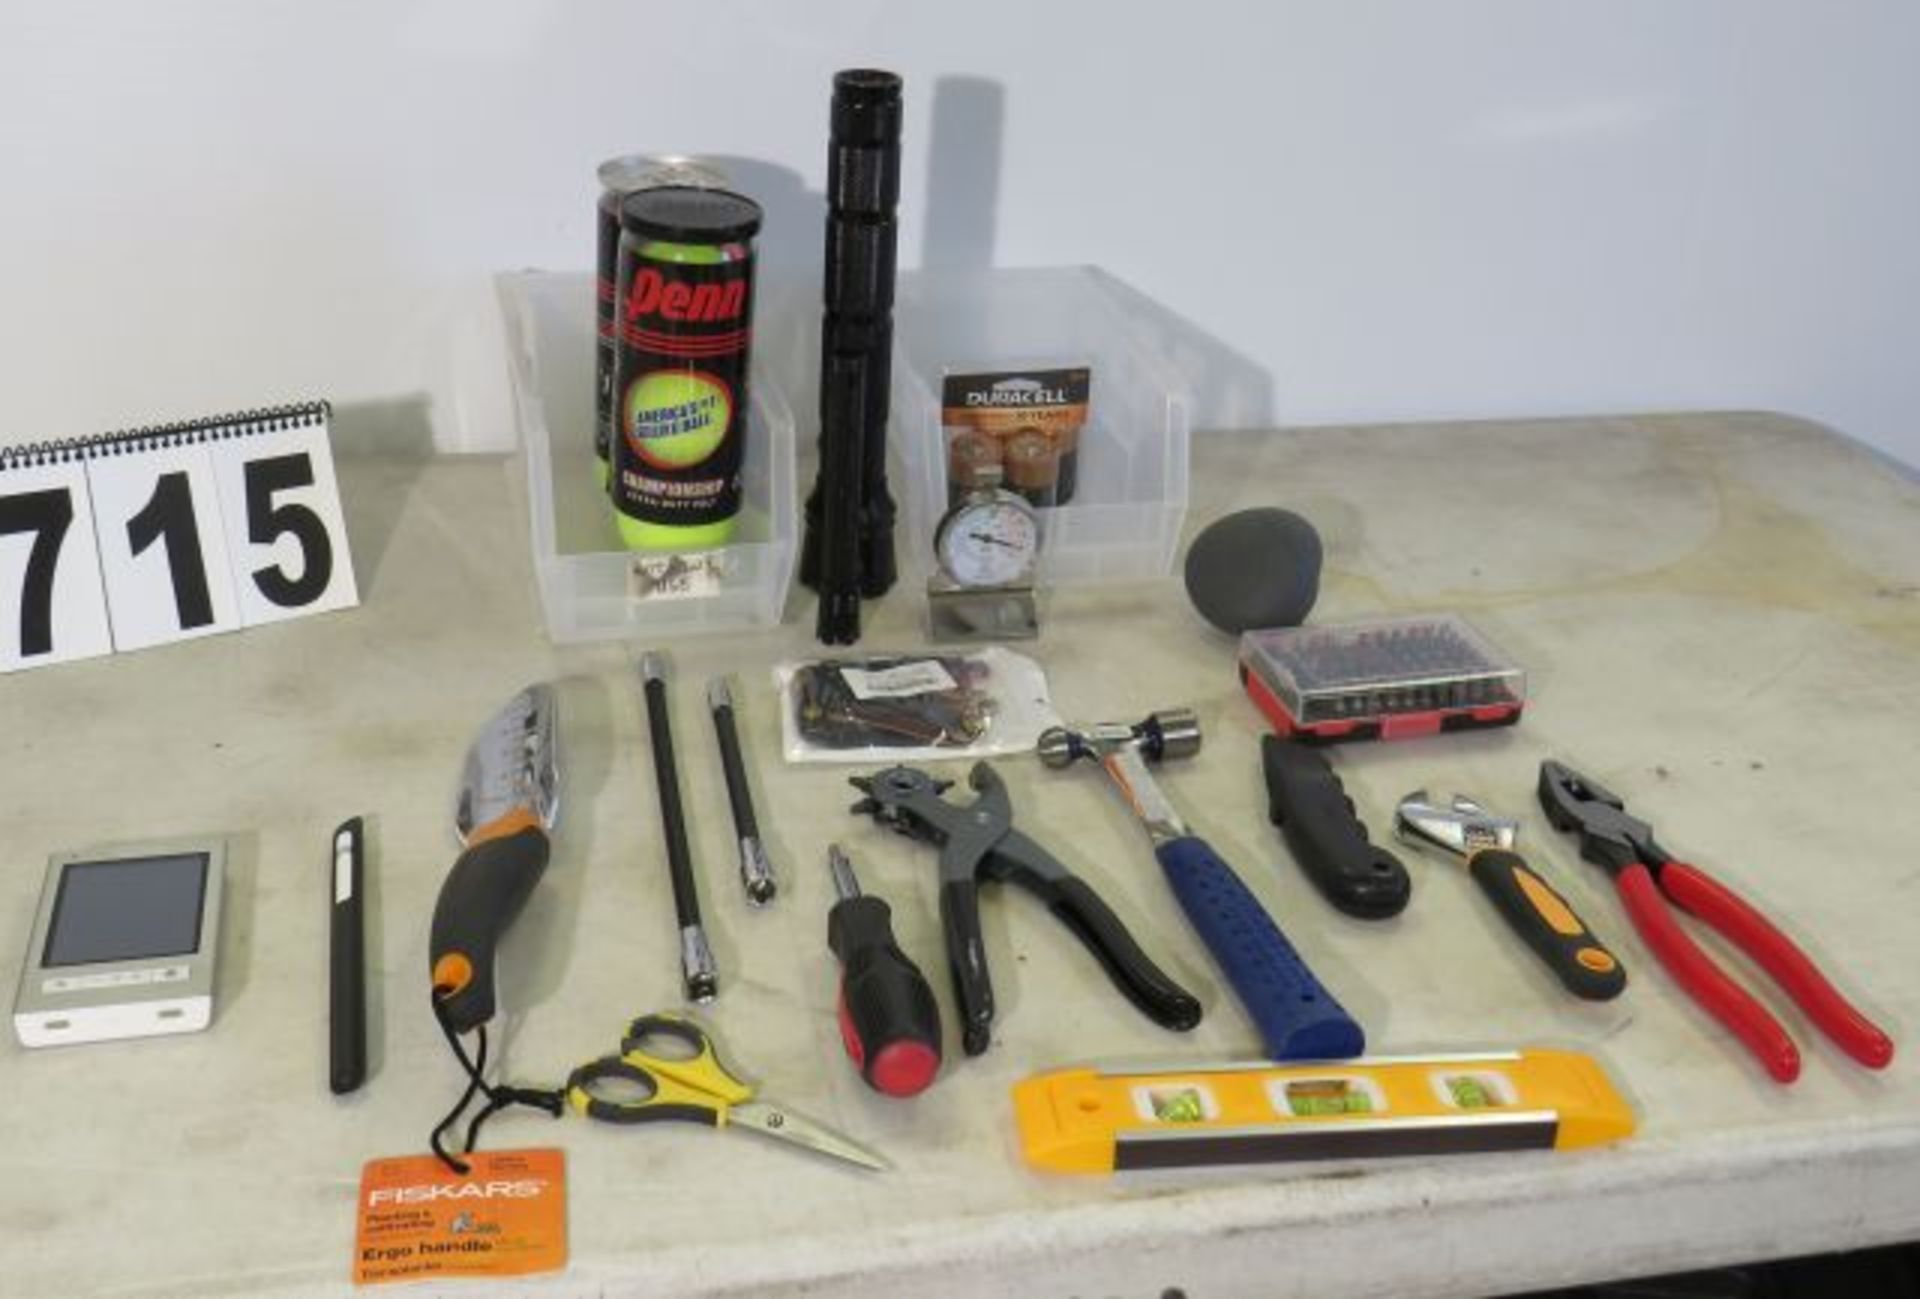 mixed tools, flashlights, tennis balls, oven temp gauge - Image 2 of 3